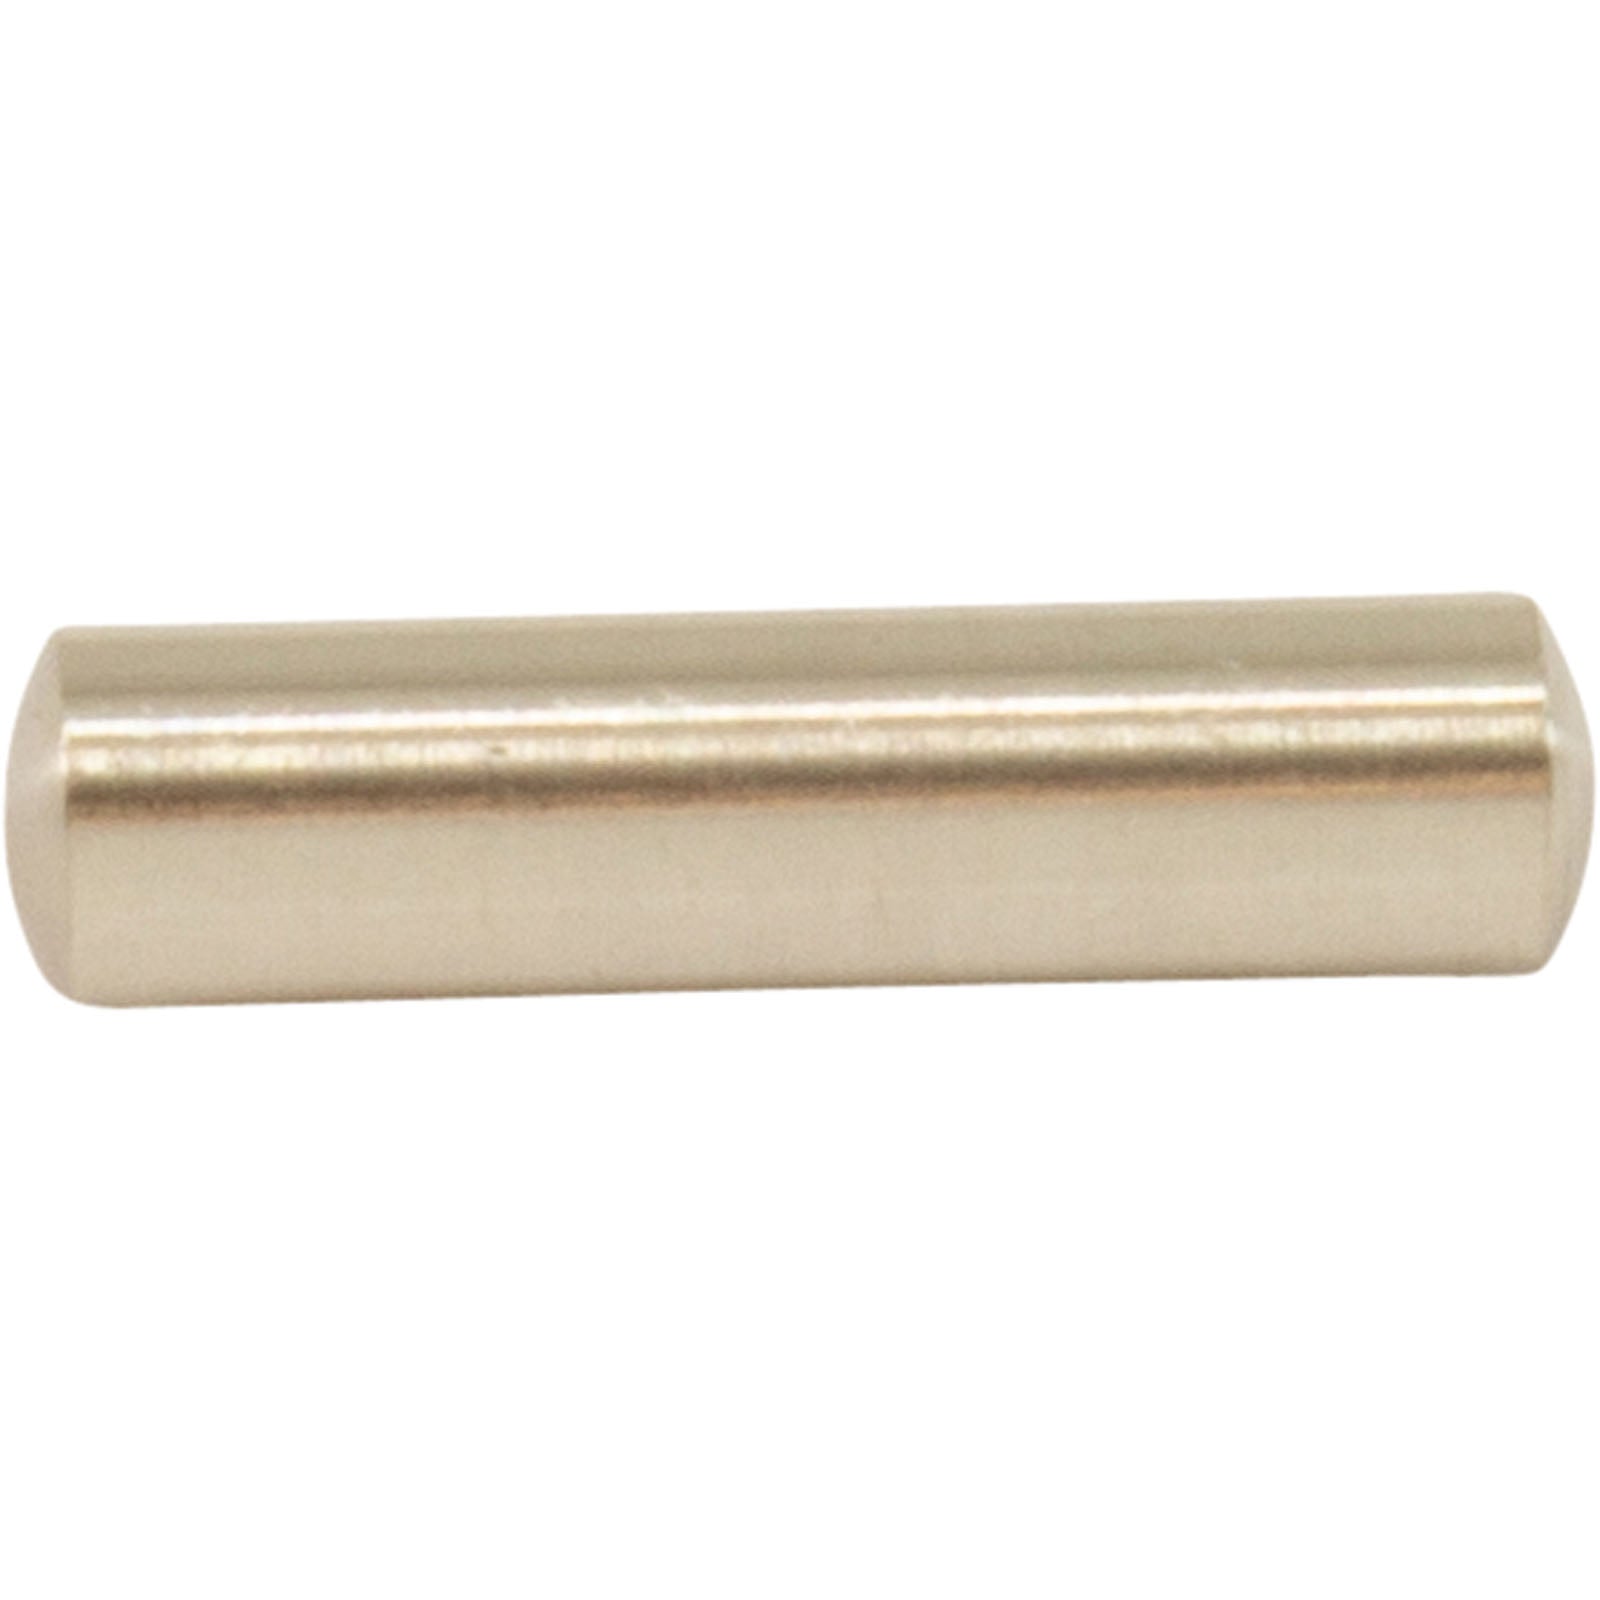 Shaft Pin, For Motor Block, Set of 5, Zodiac/Polaris R0657900